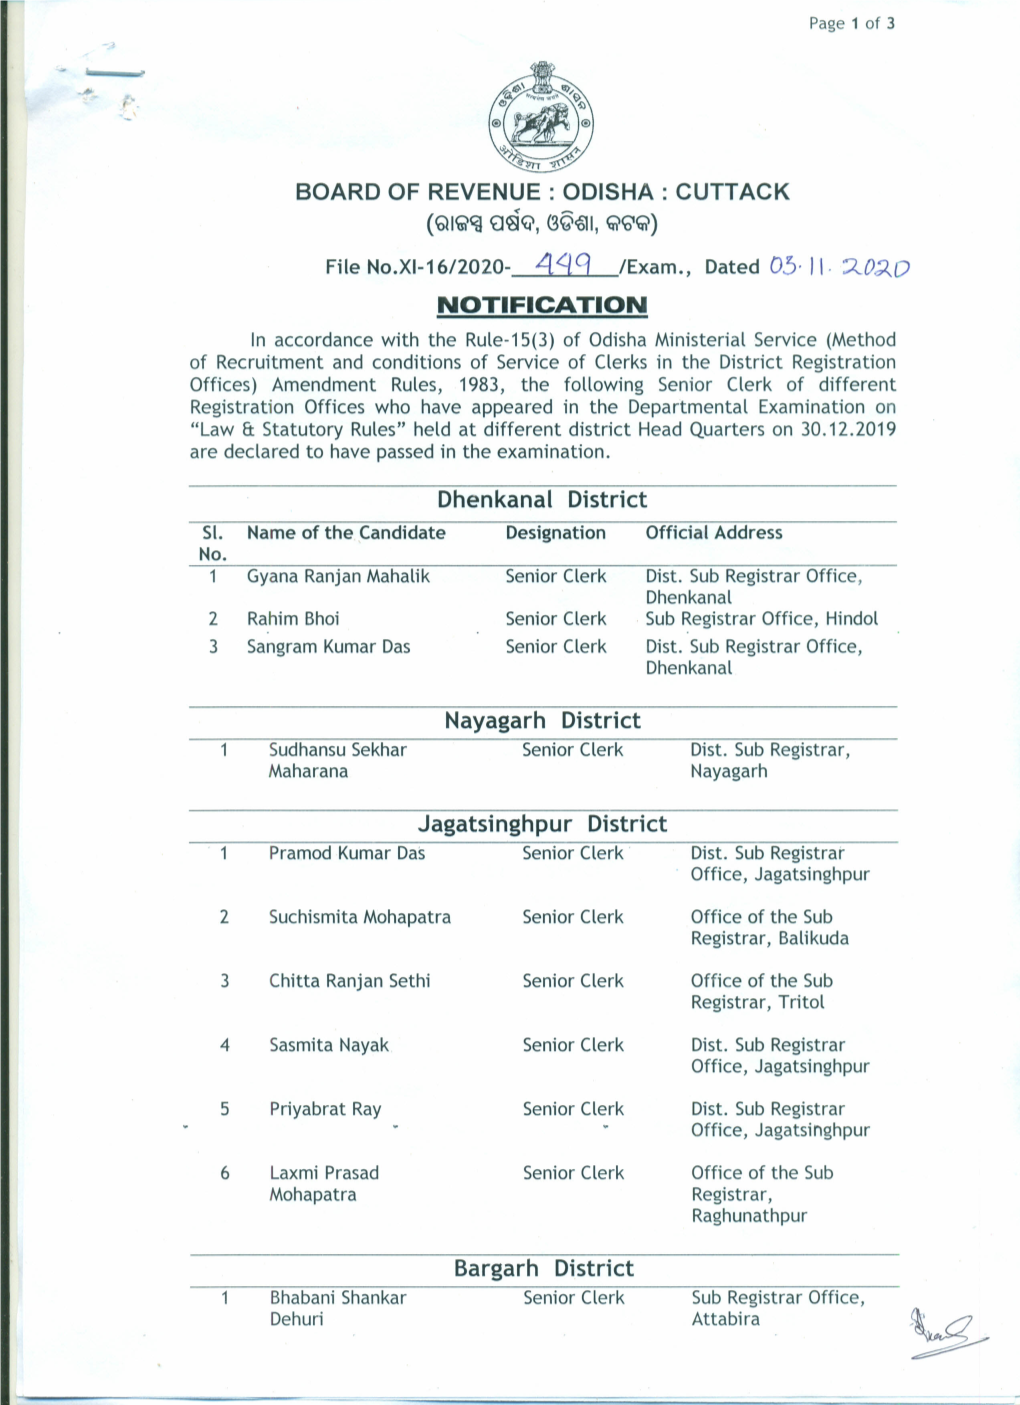 CUTTACK NOTIFICATION Dhenkanal District Nayagarh District